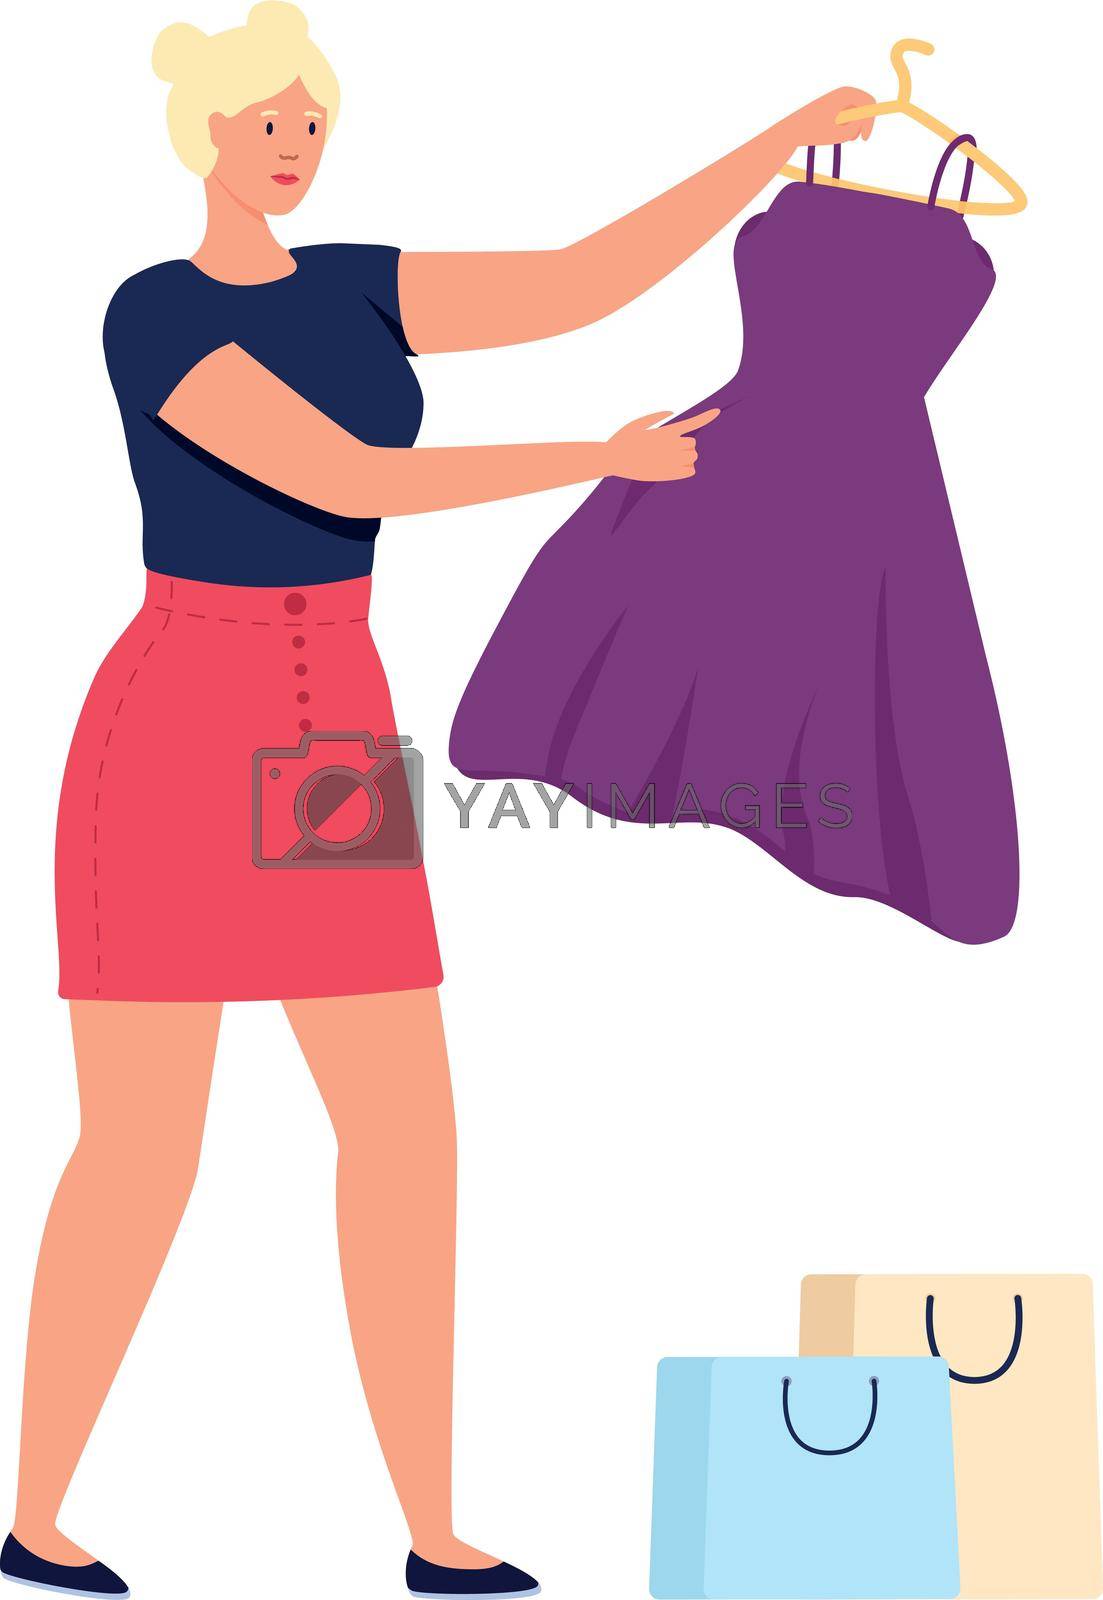 Royalty free image of Girl consumer shopper buy dress isolated on white background by LadadikArt